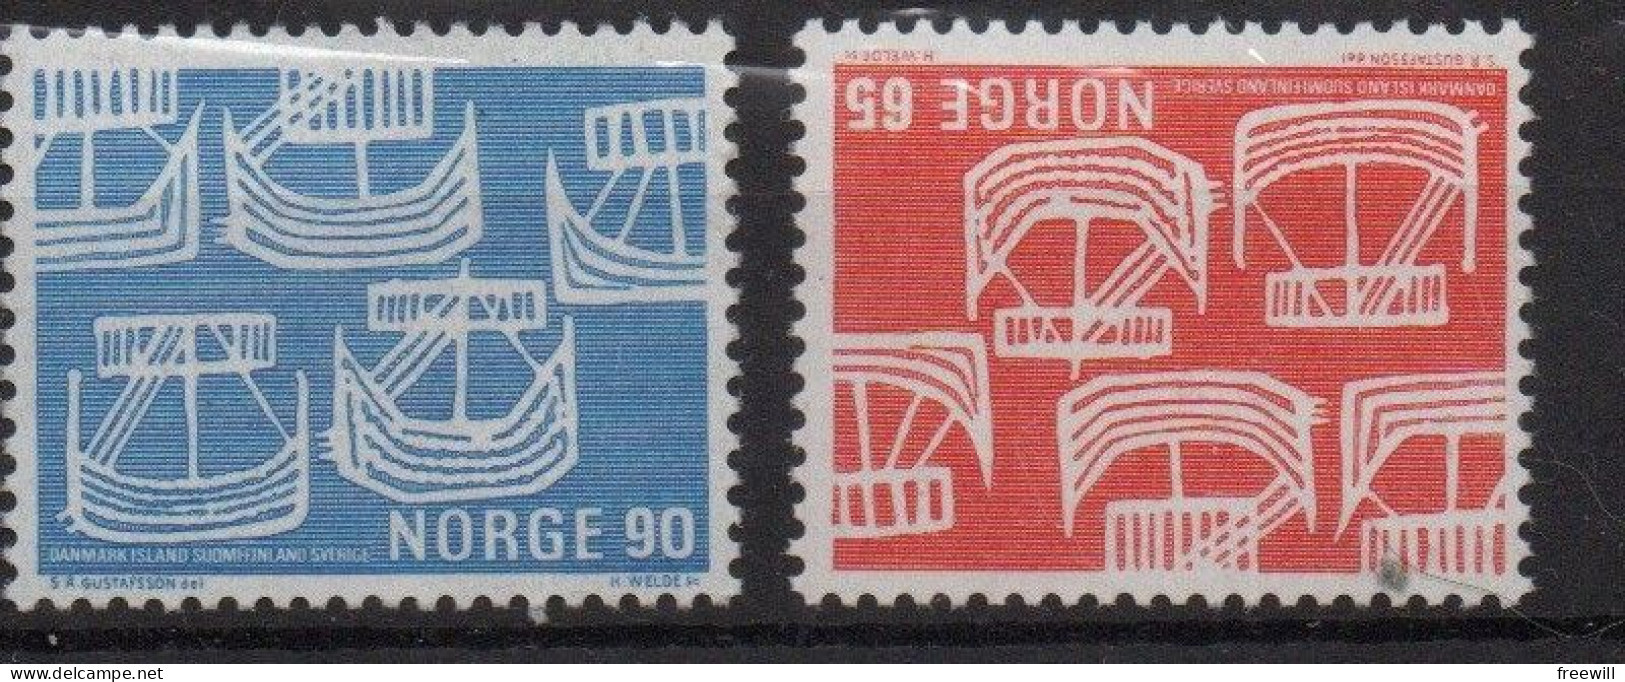 Norvège Norway Timbres Divers - Various Stamps -Verschillende Postzegels MNH - Unused Stamps